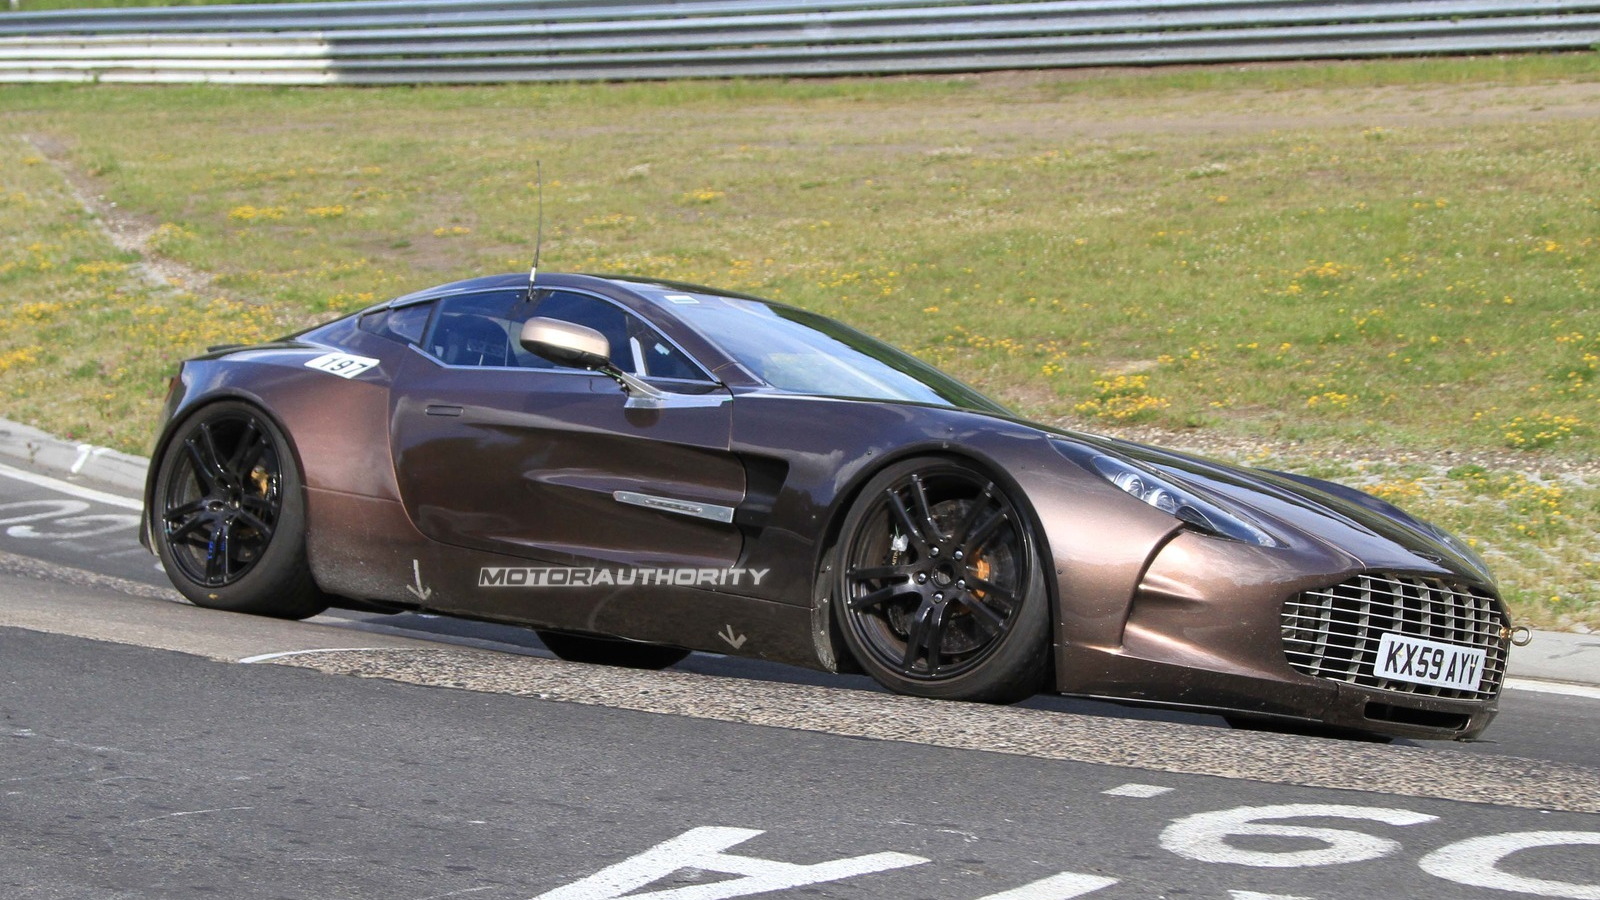 Spy Shots: Aston Martin One-77 testing at the Nurburgring